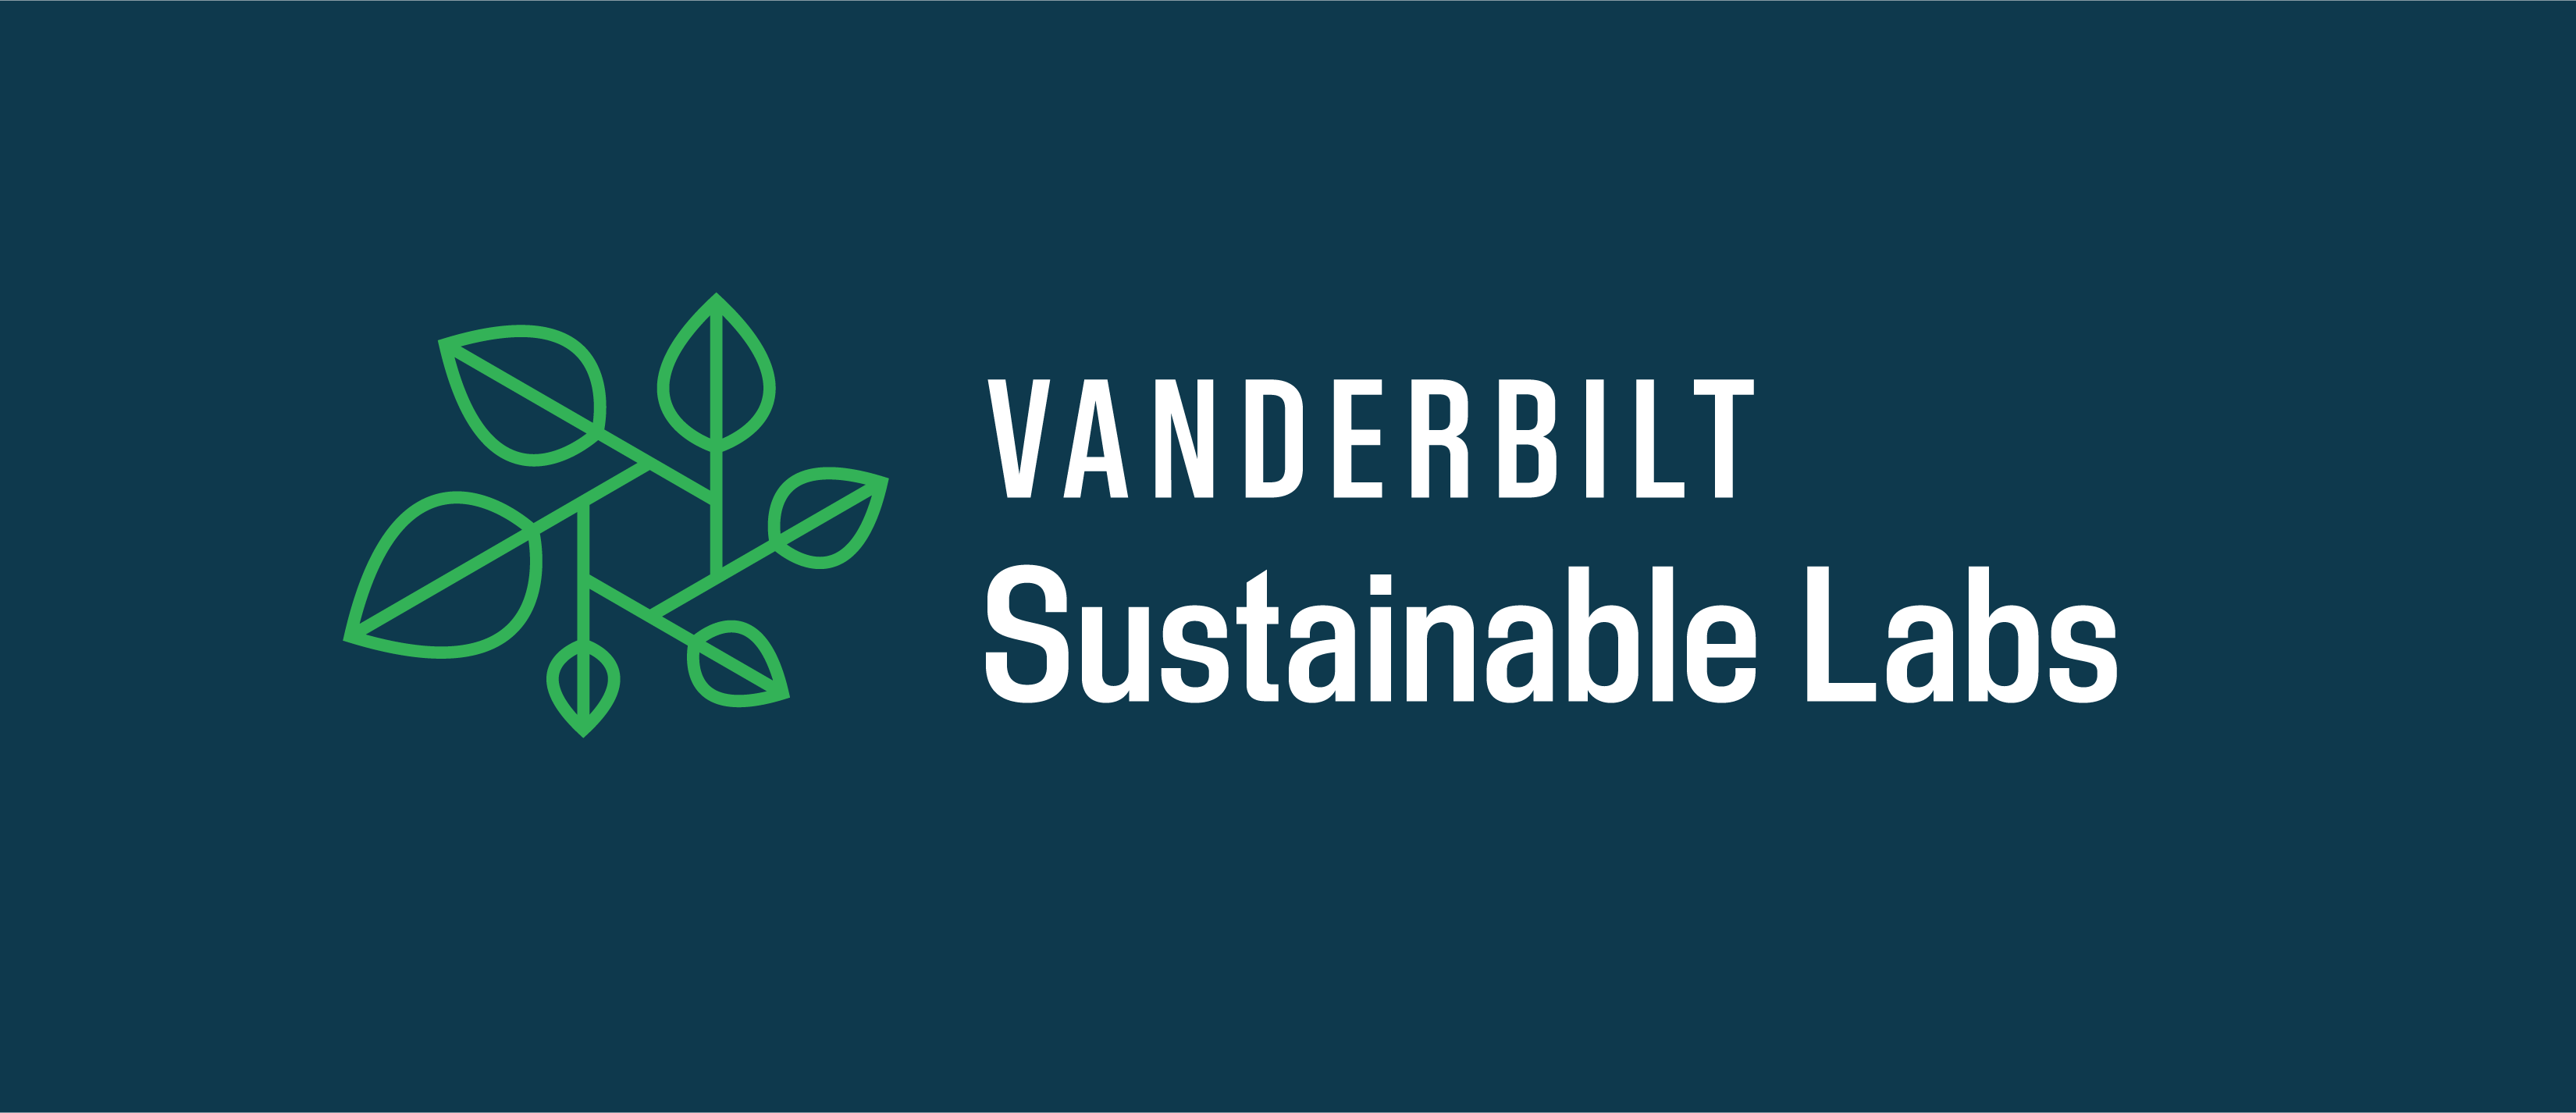 Vanderbilt Sustainable Labs logo